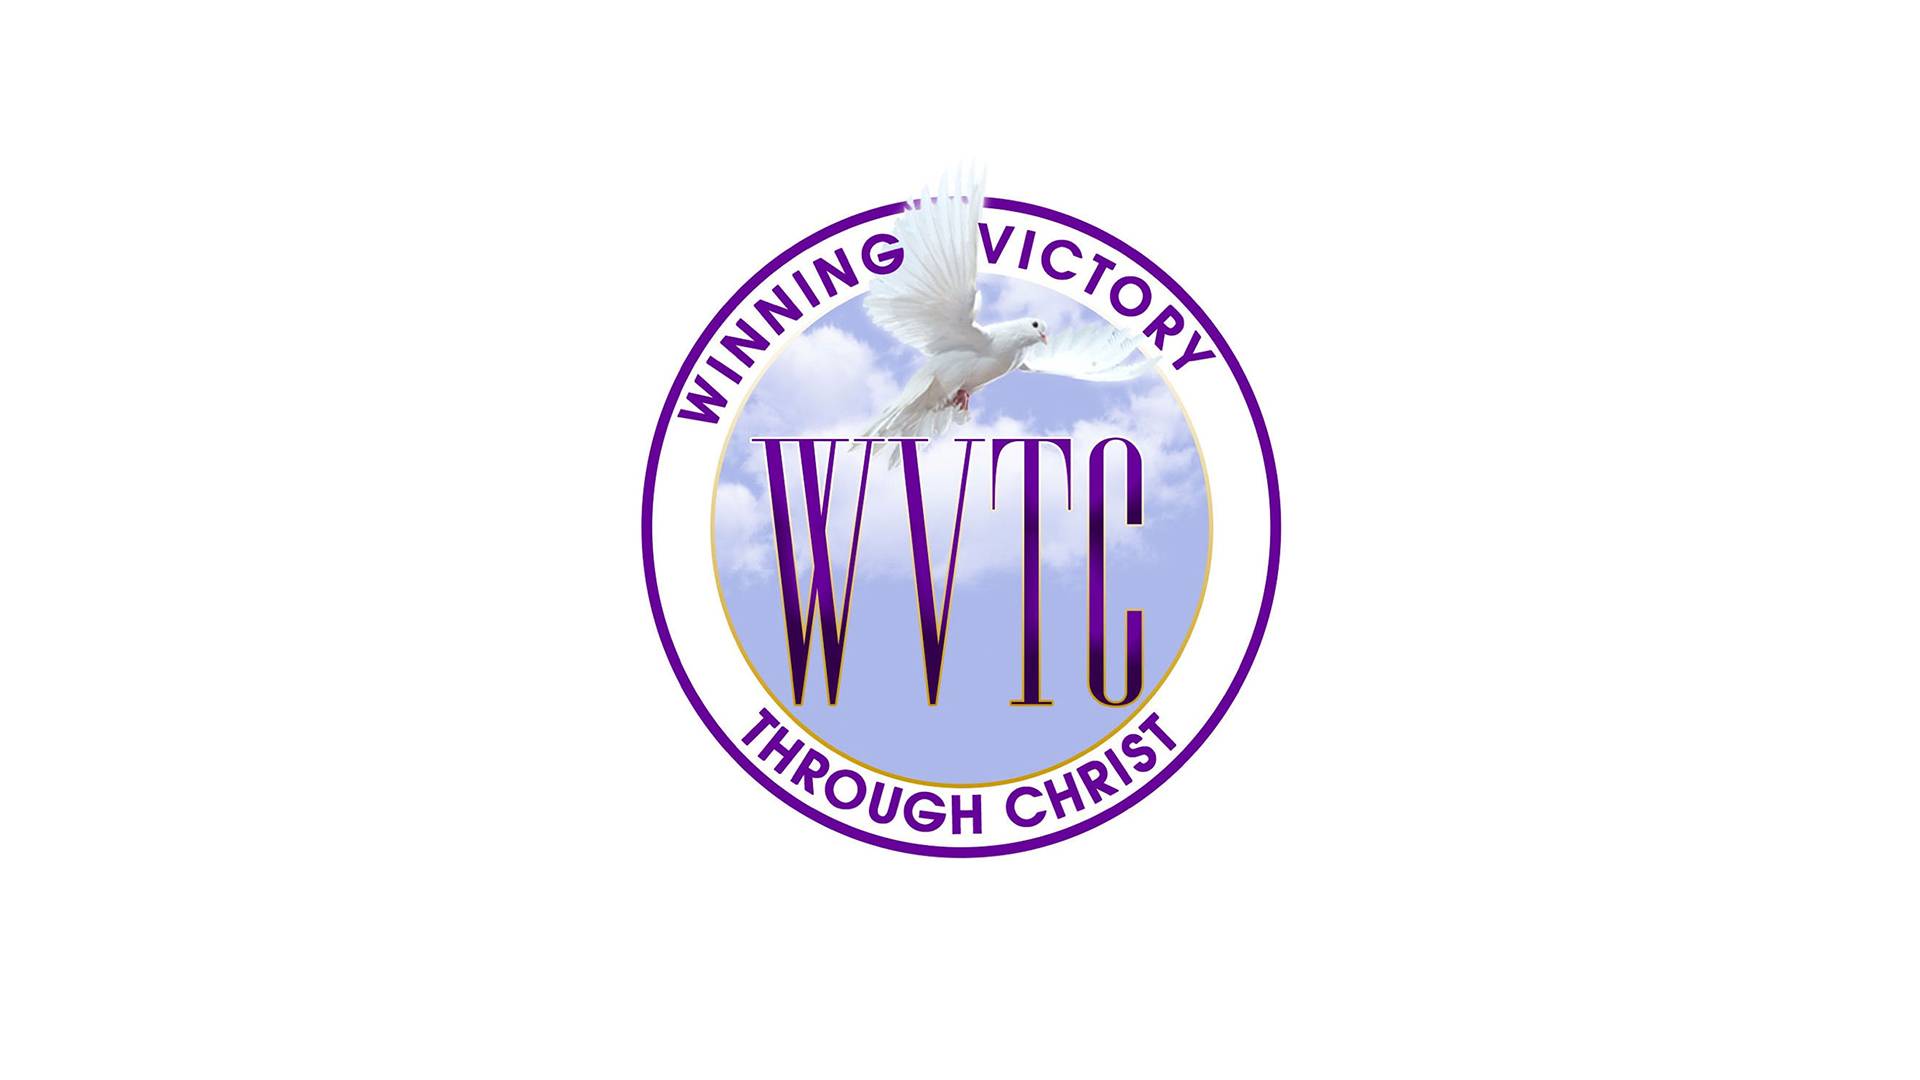 WVTC Gospel Radio Network